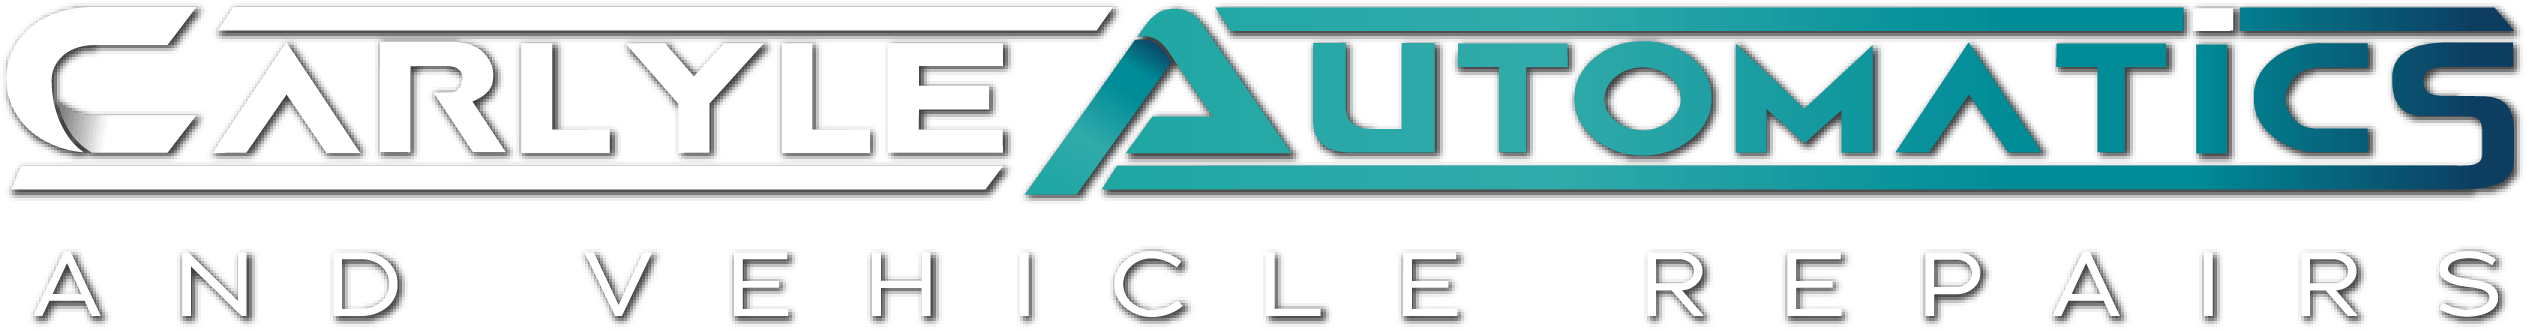 Carlyle Automatics Logo Text